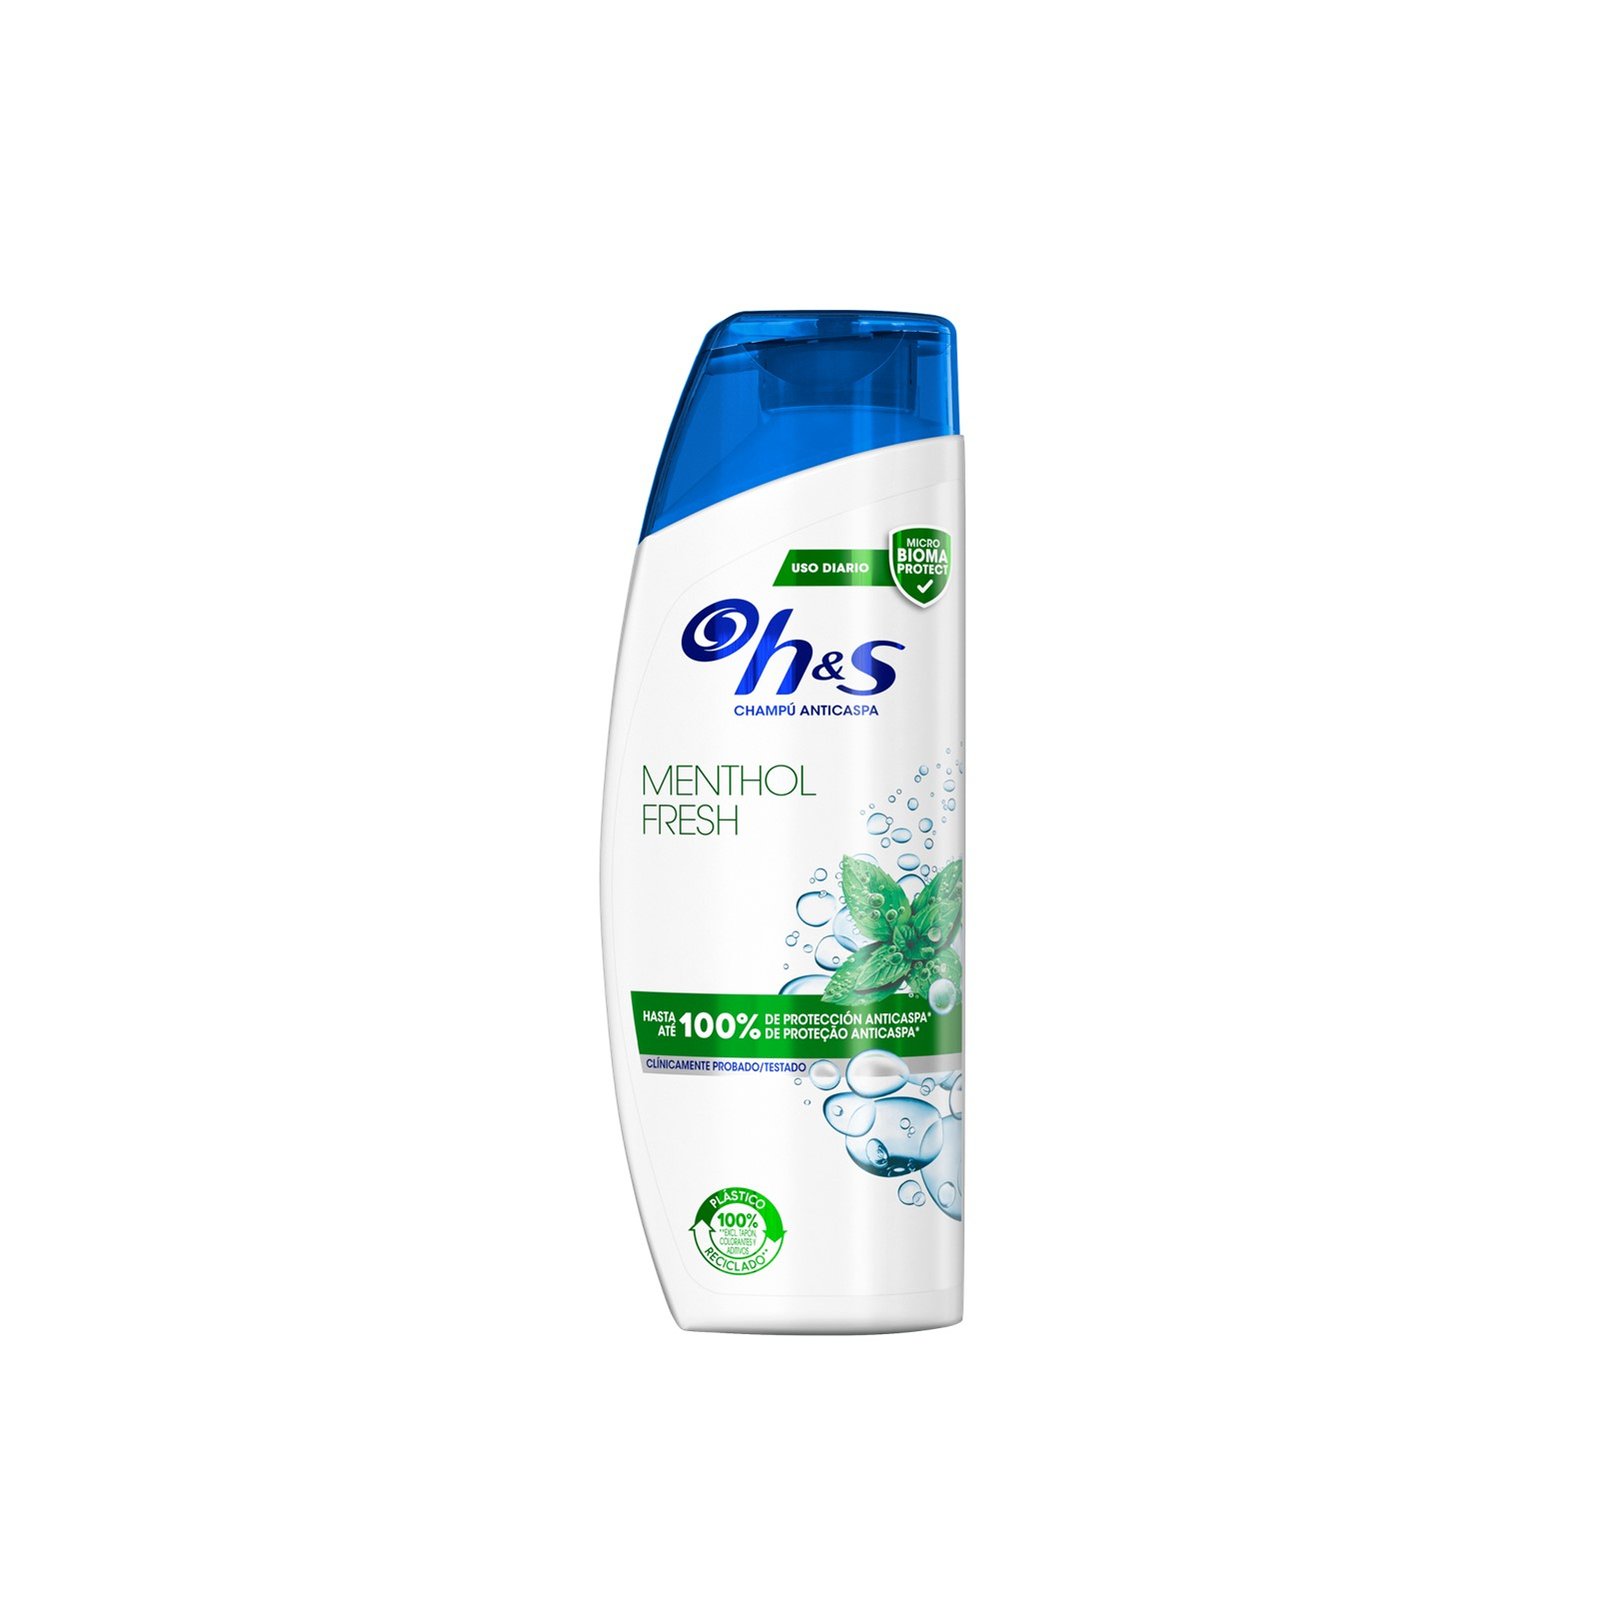 H&S Menthol Fresh Shampoo 230ml (7.7 fl oz)